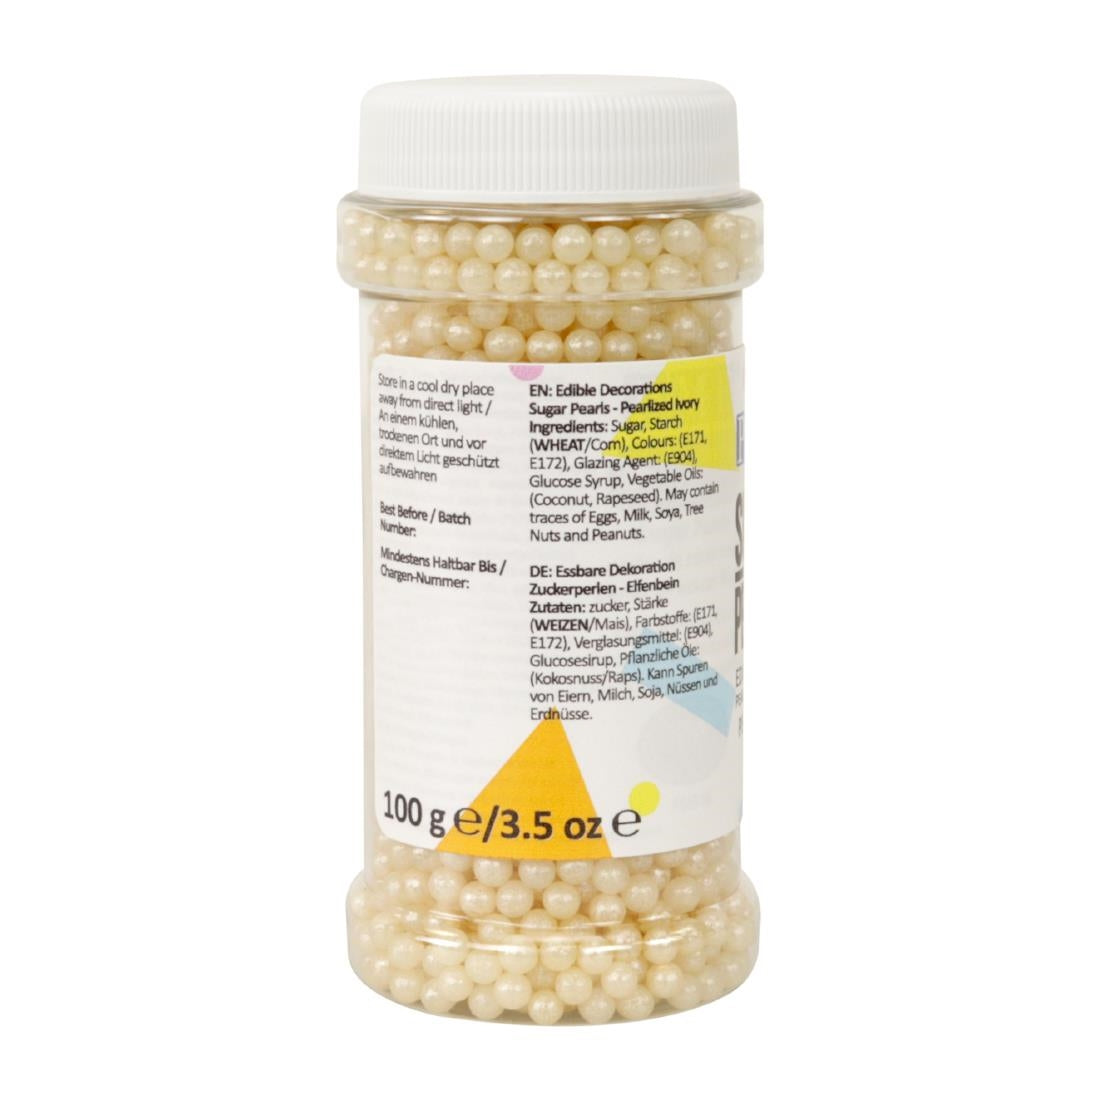 HU218 PME Sugar Pearls 100g - Pearlised Ivory